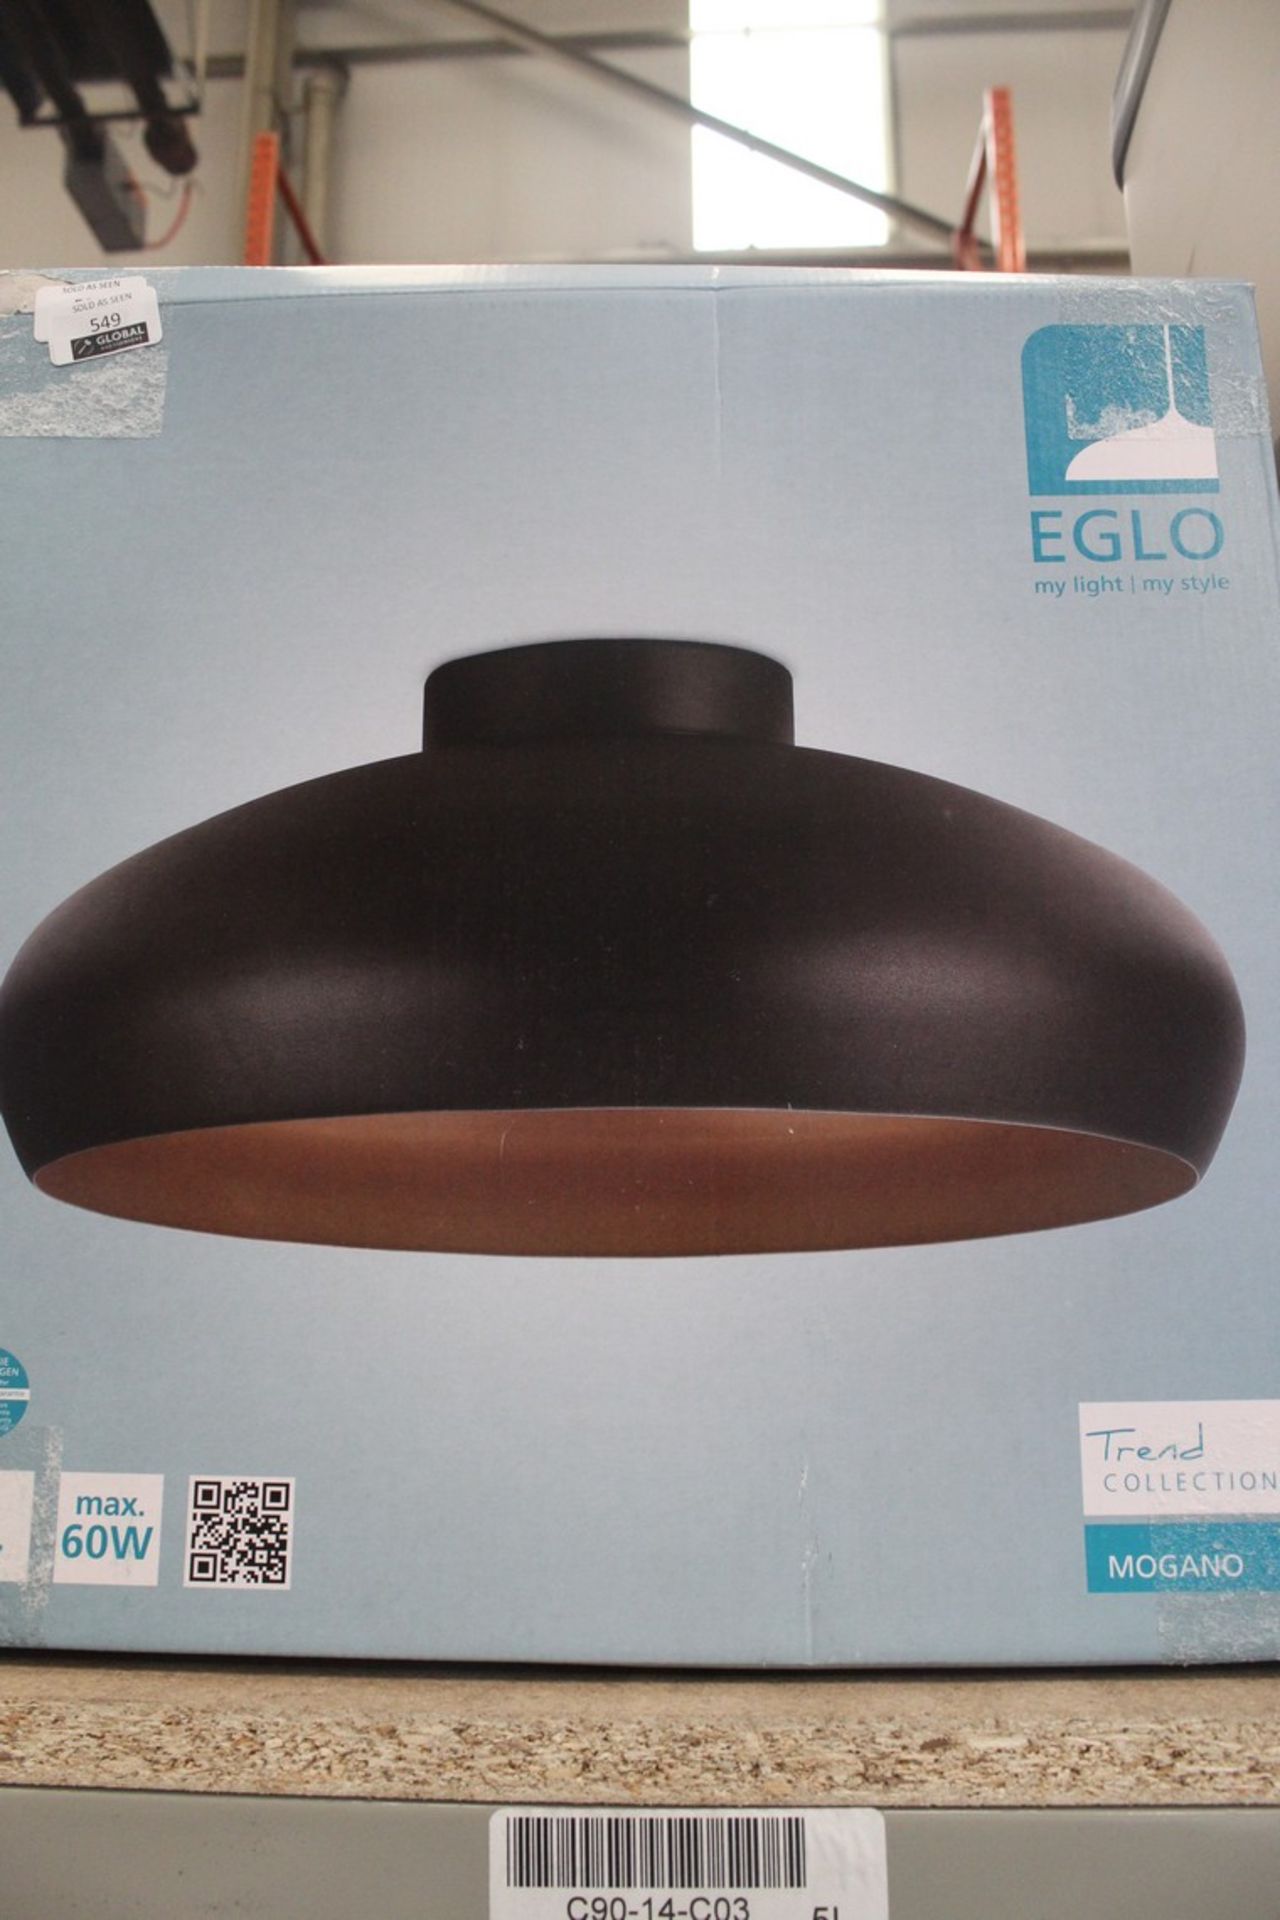 Boxed Eglo Trend Collection Mogano Light